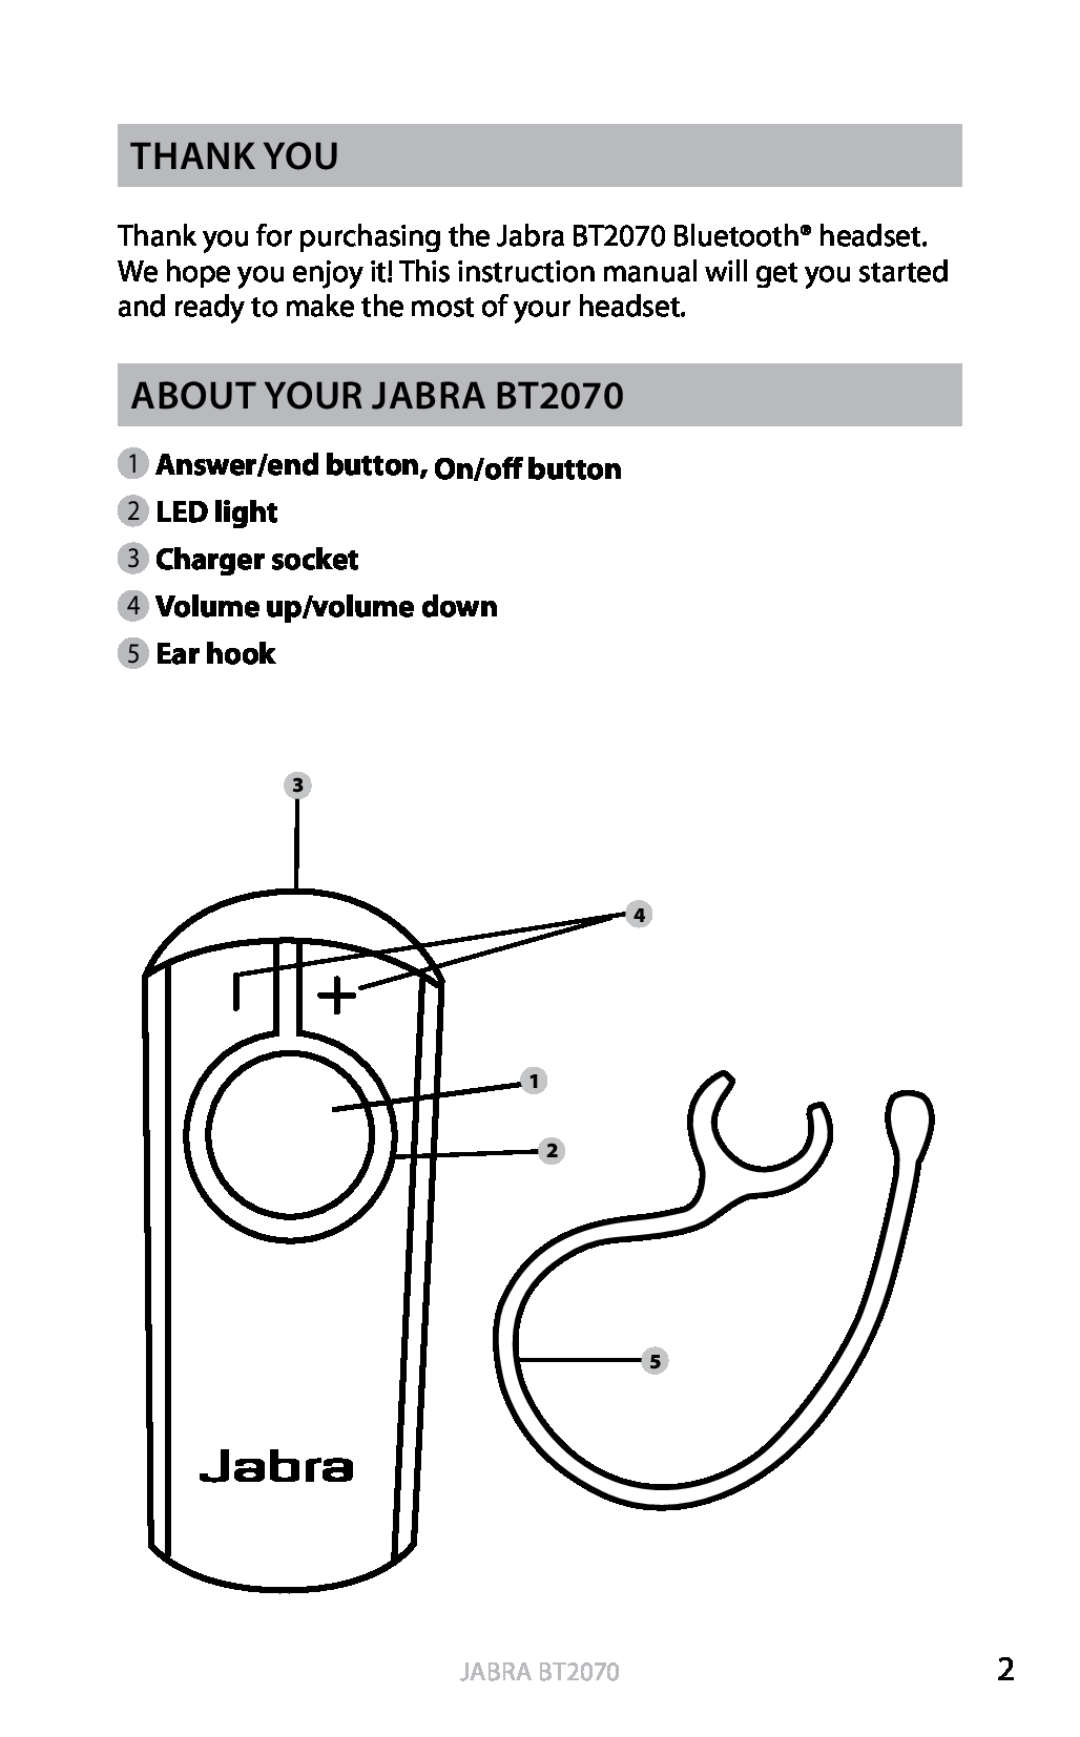 Jabra english, Thank you, About your Jabra BT2070, 1Answer/end button, On/off button 2LED light, Jabra bt2070 